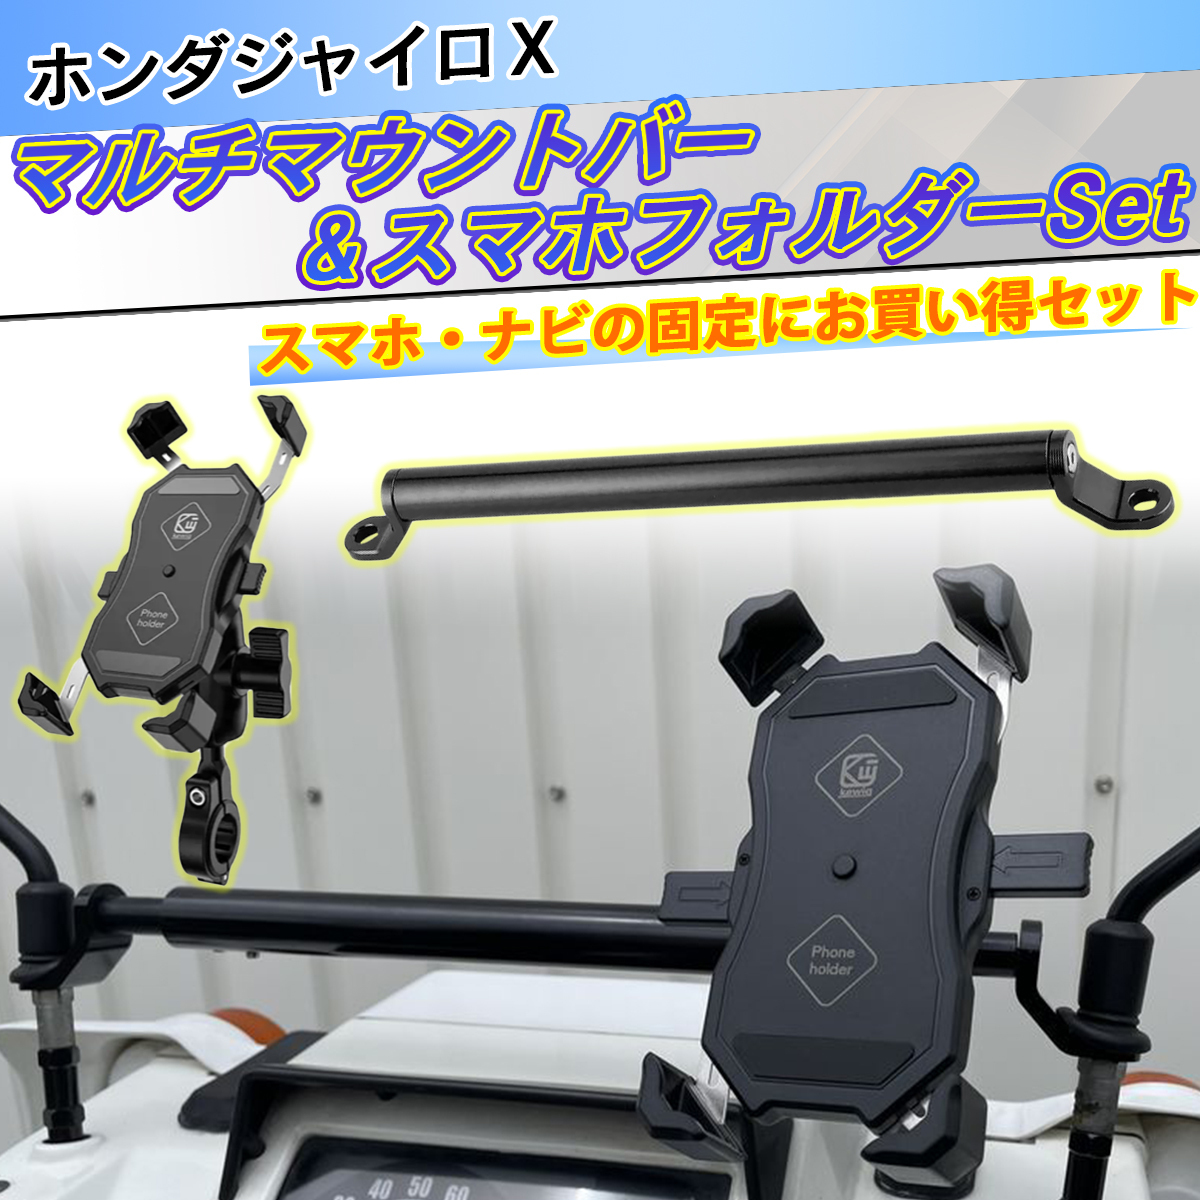 [ free shipping ] Honda Gyro Gyro X Gyro UP multi mount bar & smartphone folder - set smartphone navi. fixation .!